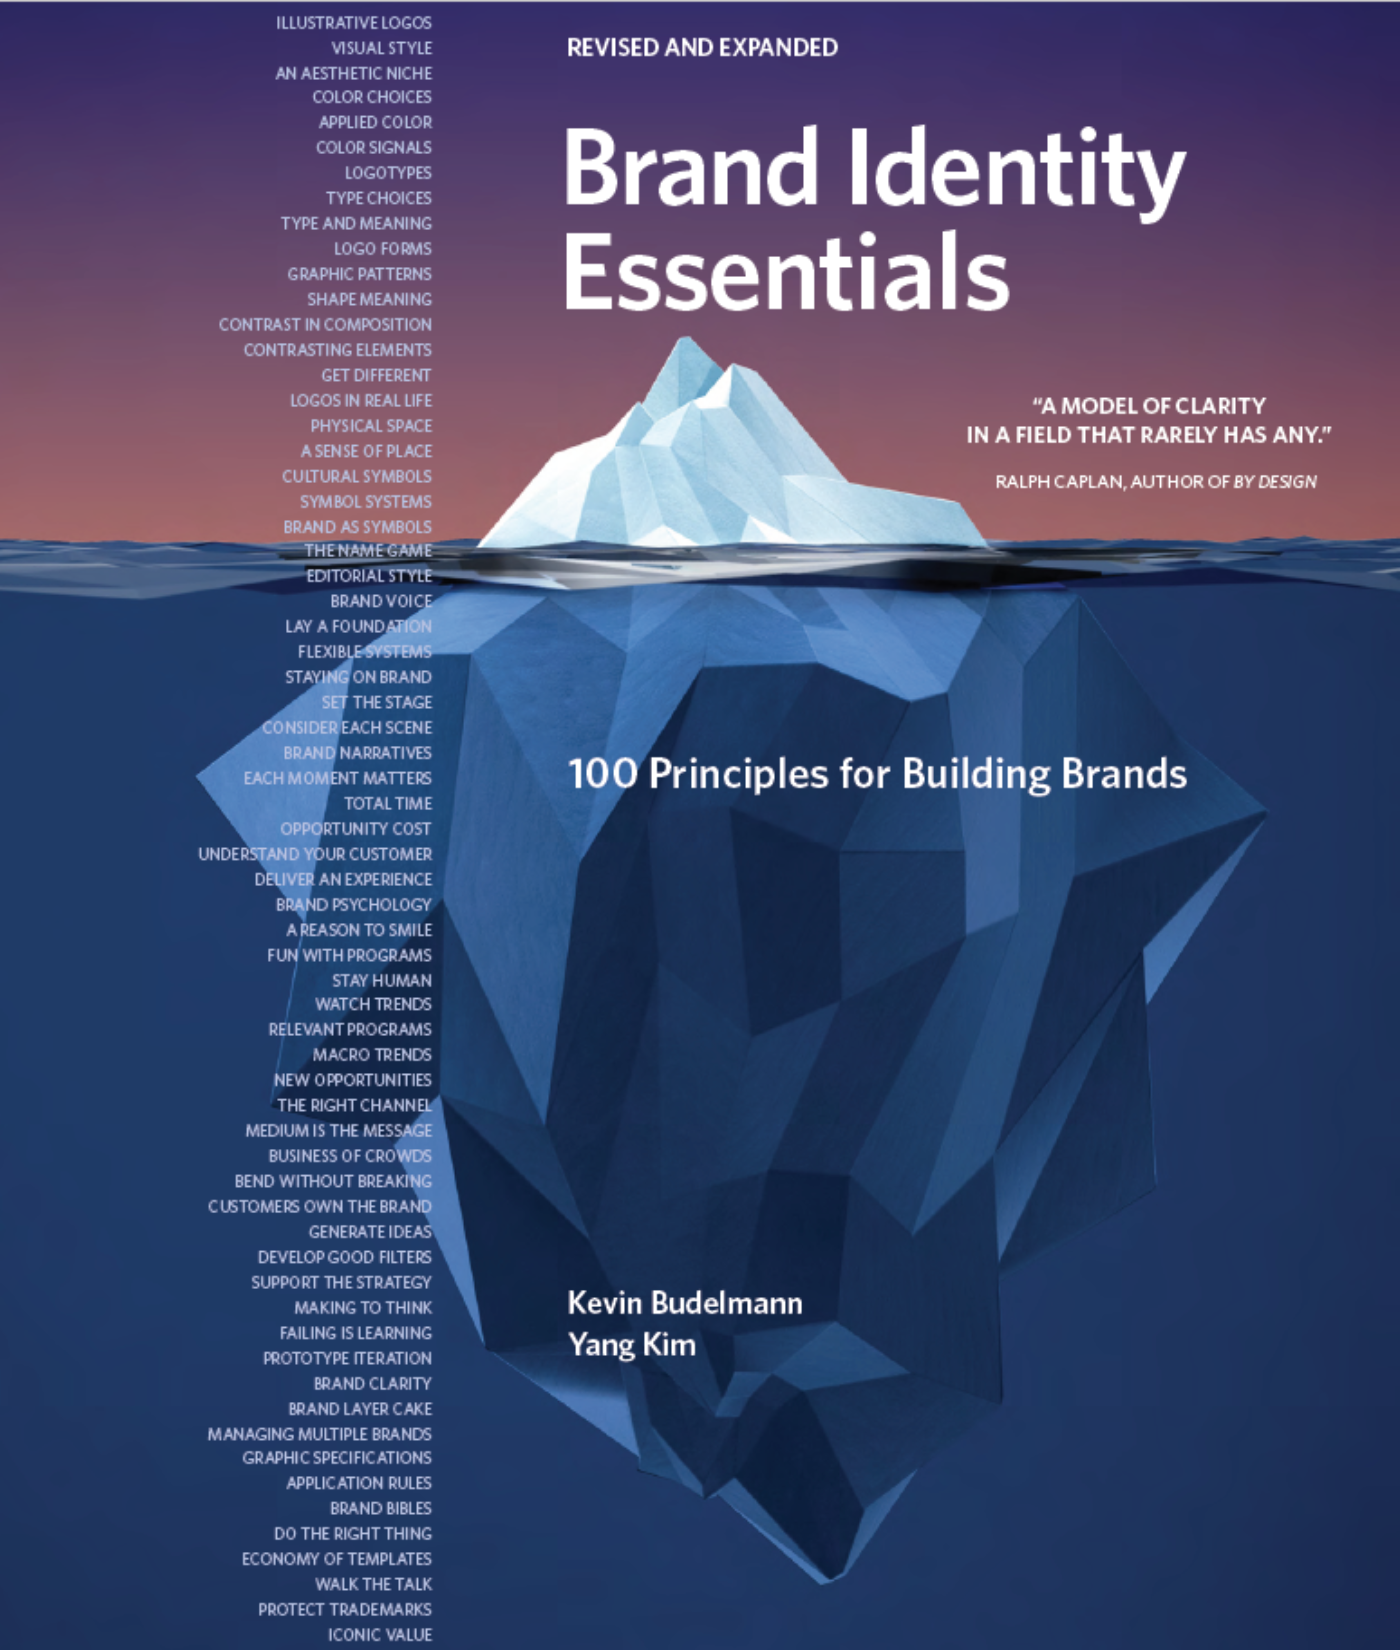 Brand Identity Essentials by Kevin Budelmann and Yang Kim